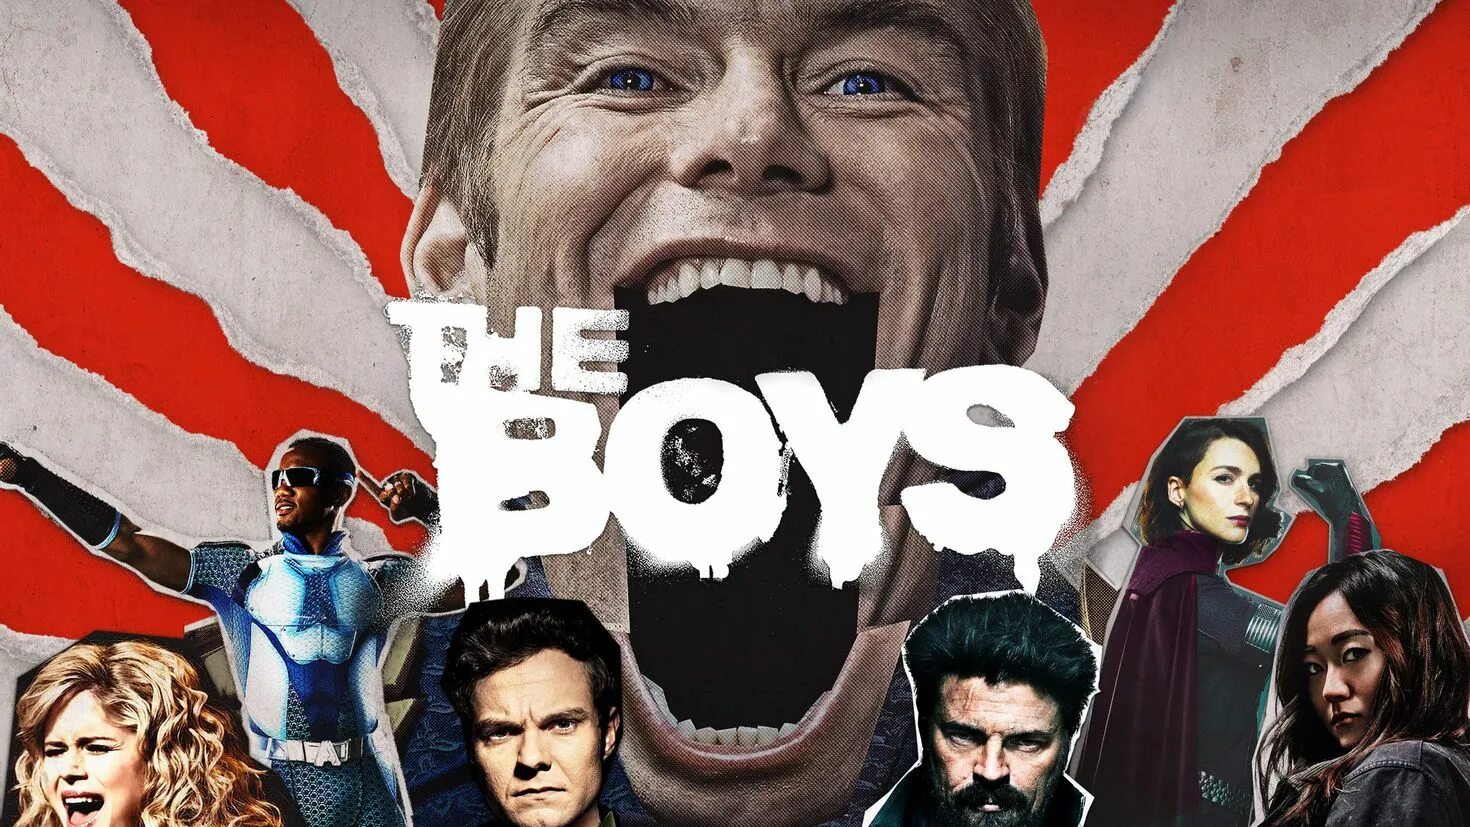 The boys likes school. The boys плакат. The boys обои на рабочий стол.